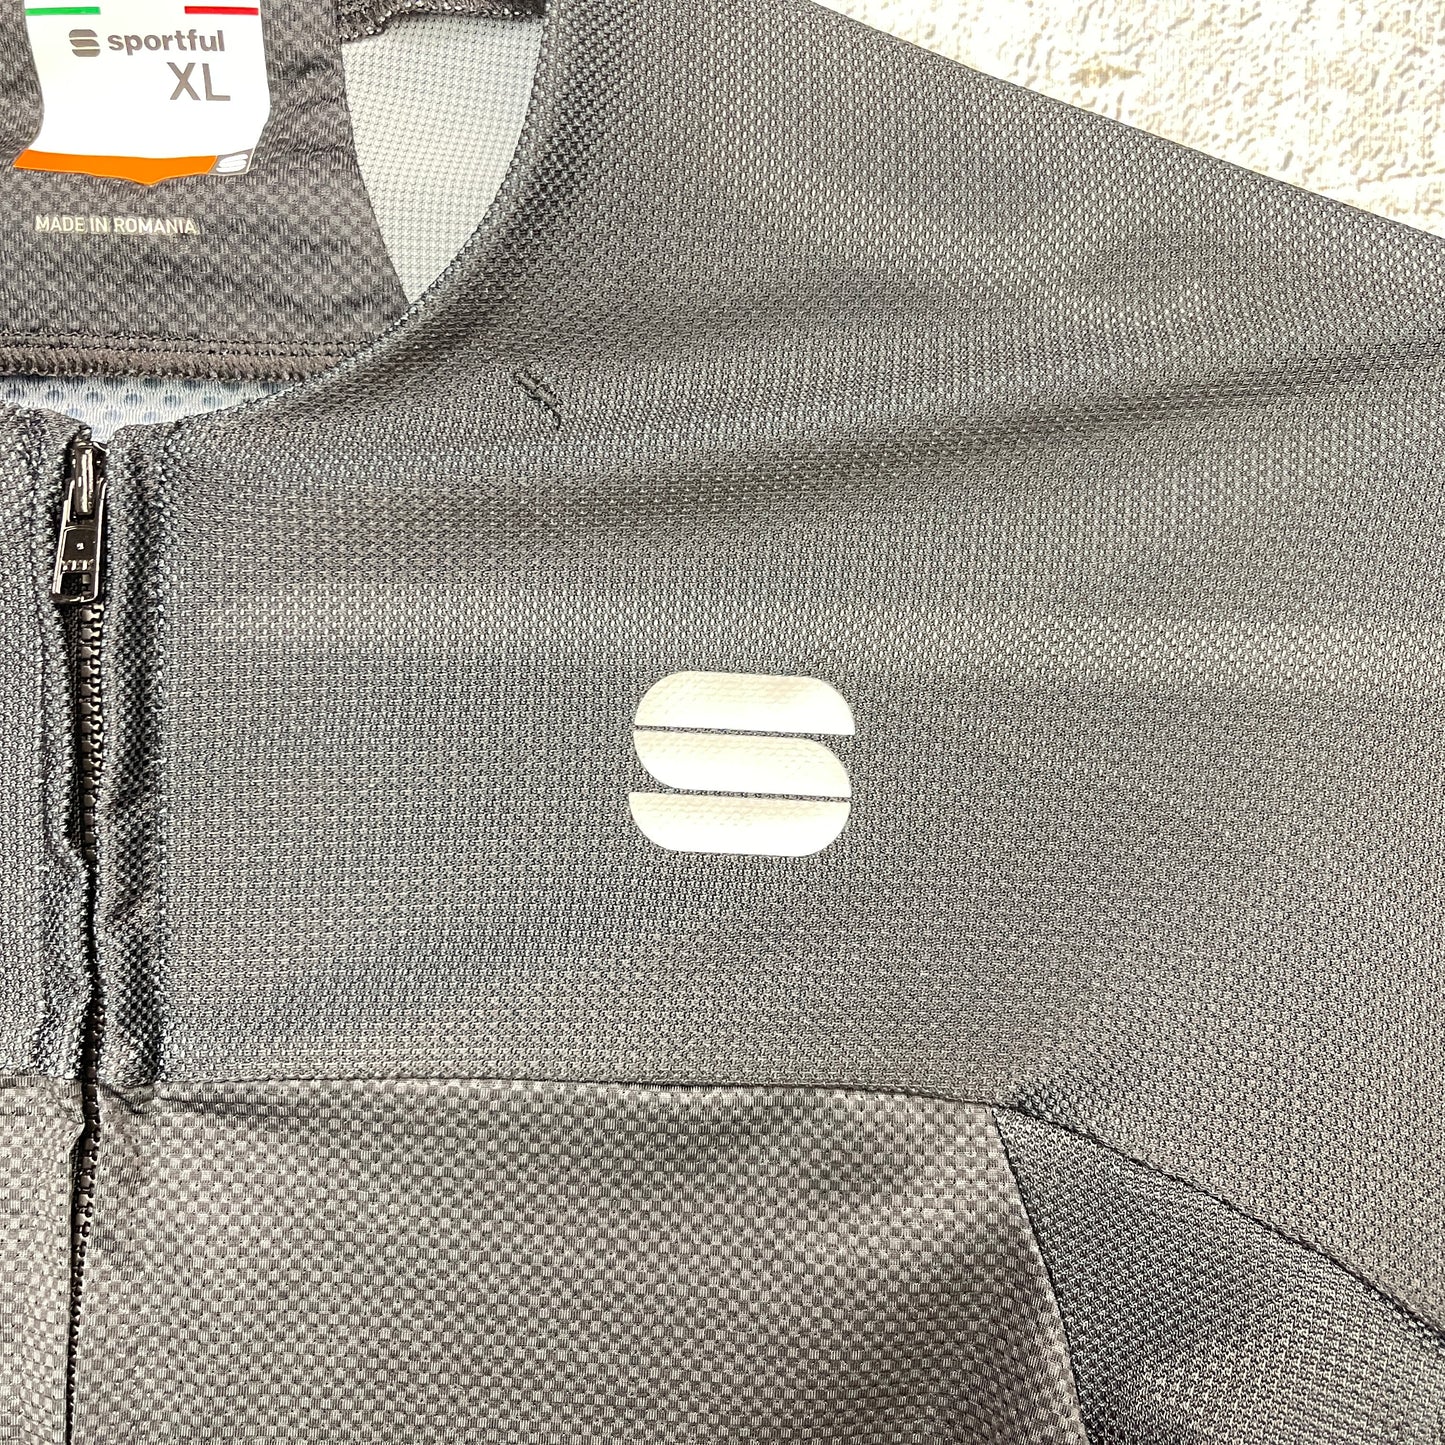 Sportful Evo XL Men's Short Sleeve Black Full Zipper Cycling Jersey